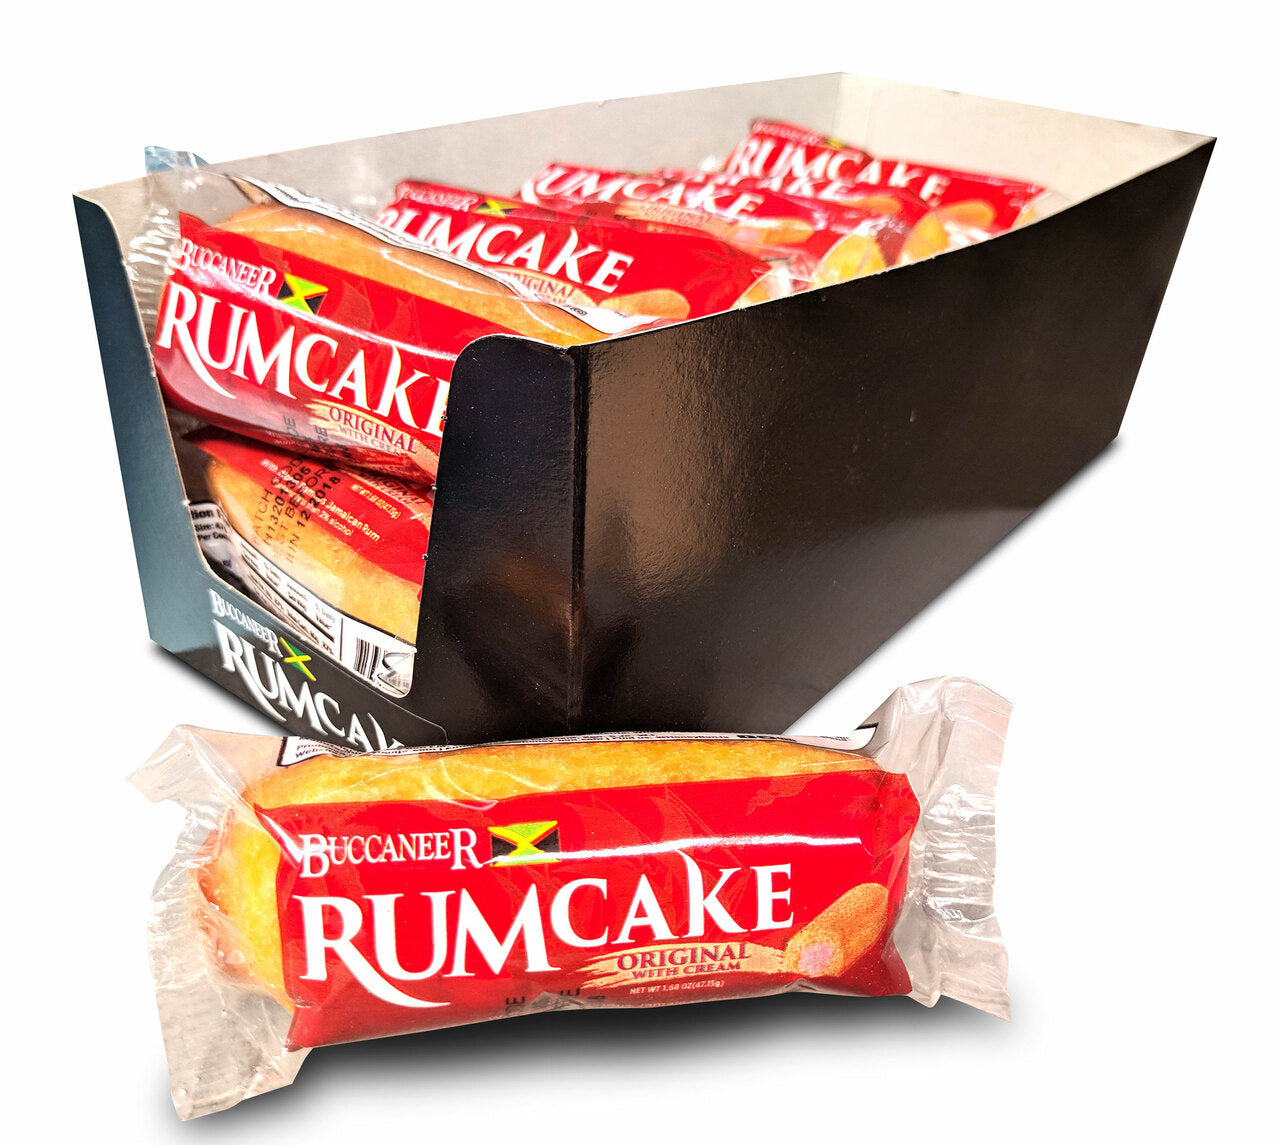  Buccaneer Pocket Size Rum Cake (set of 3)- original